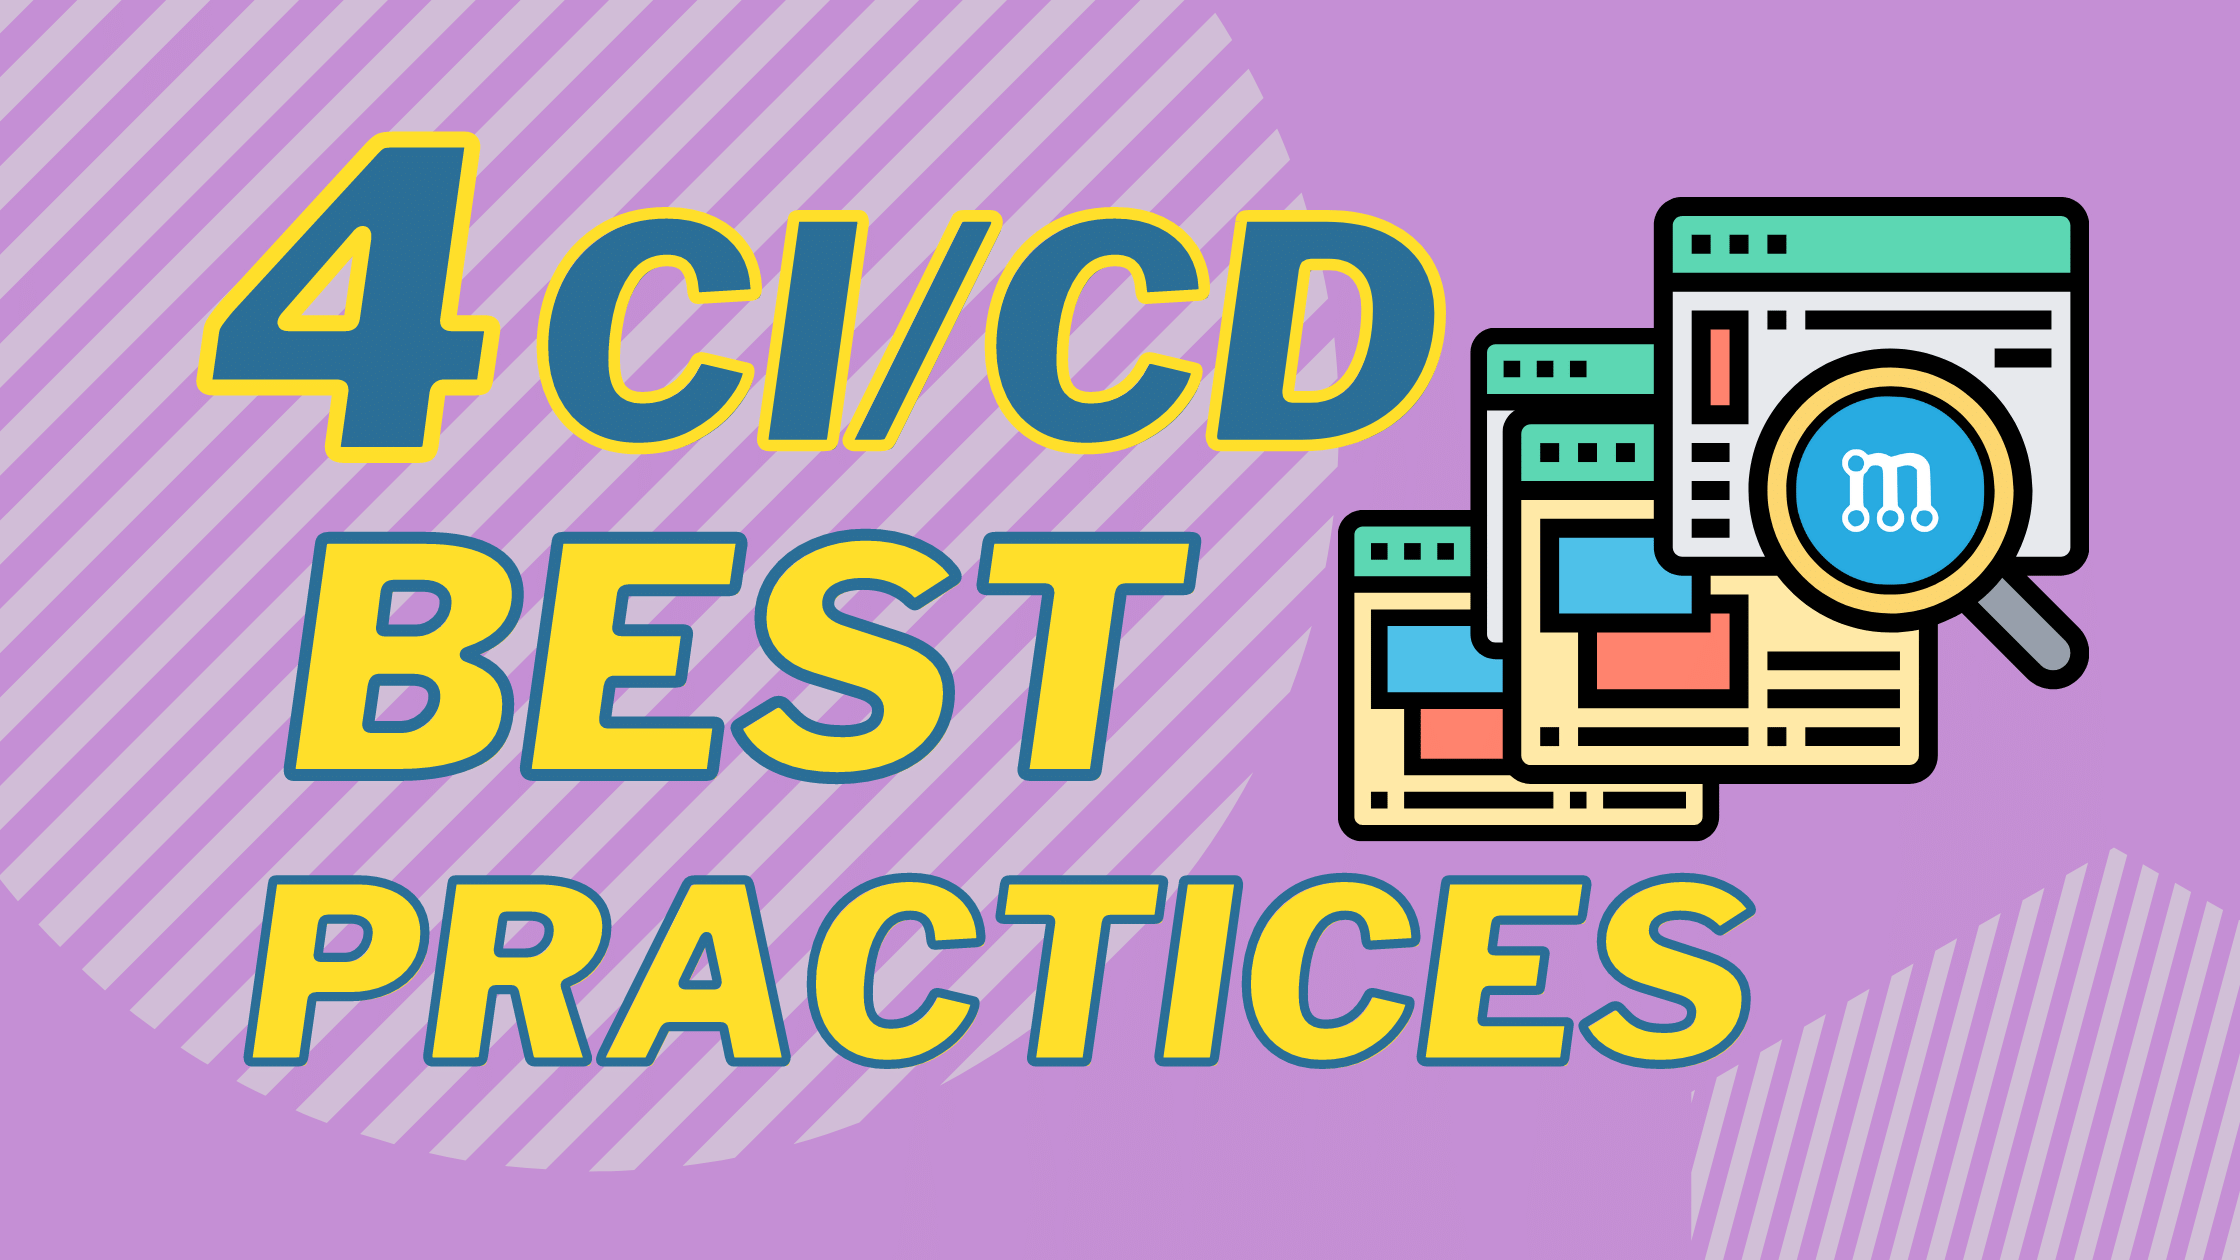 4 CI/CD Best Practices